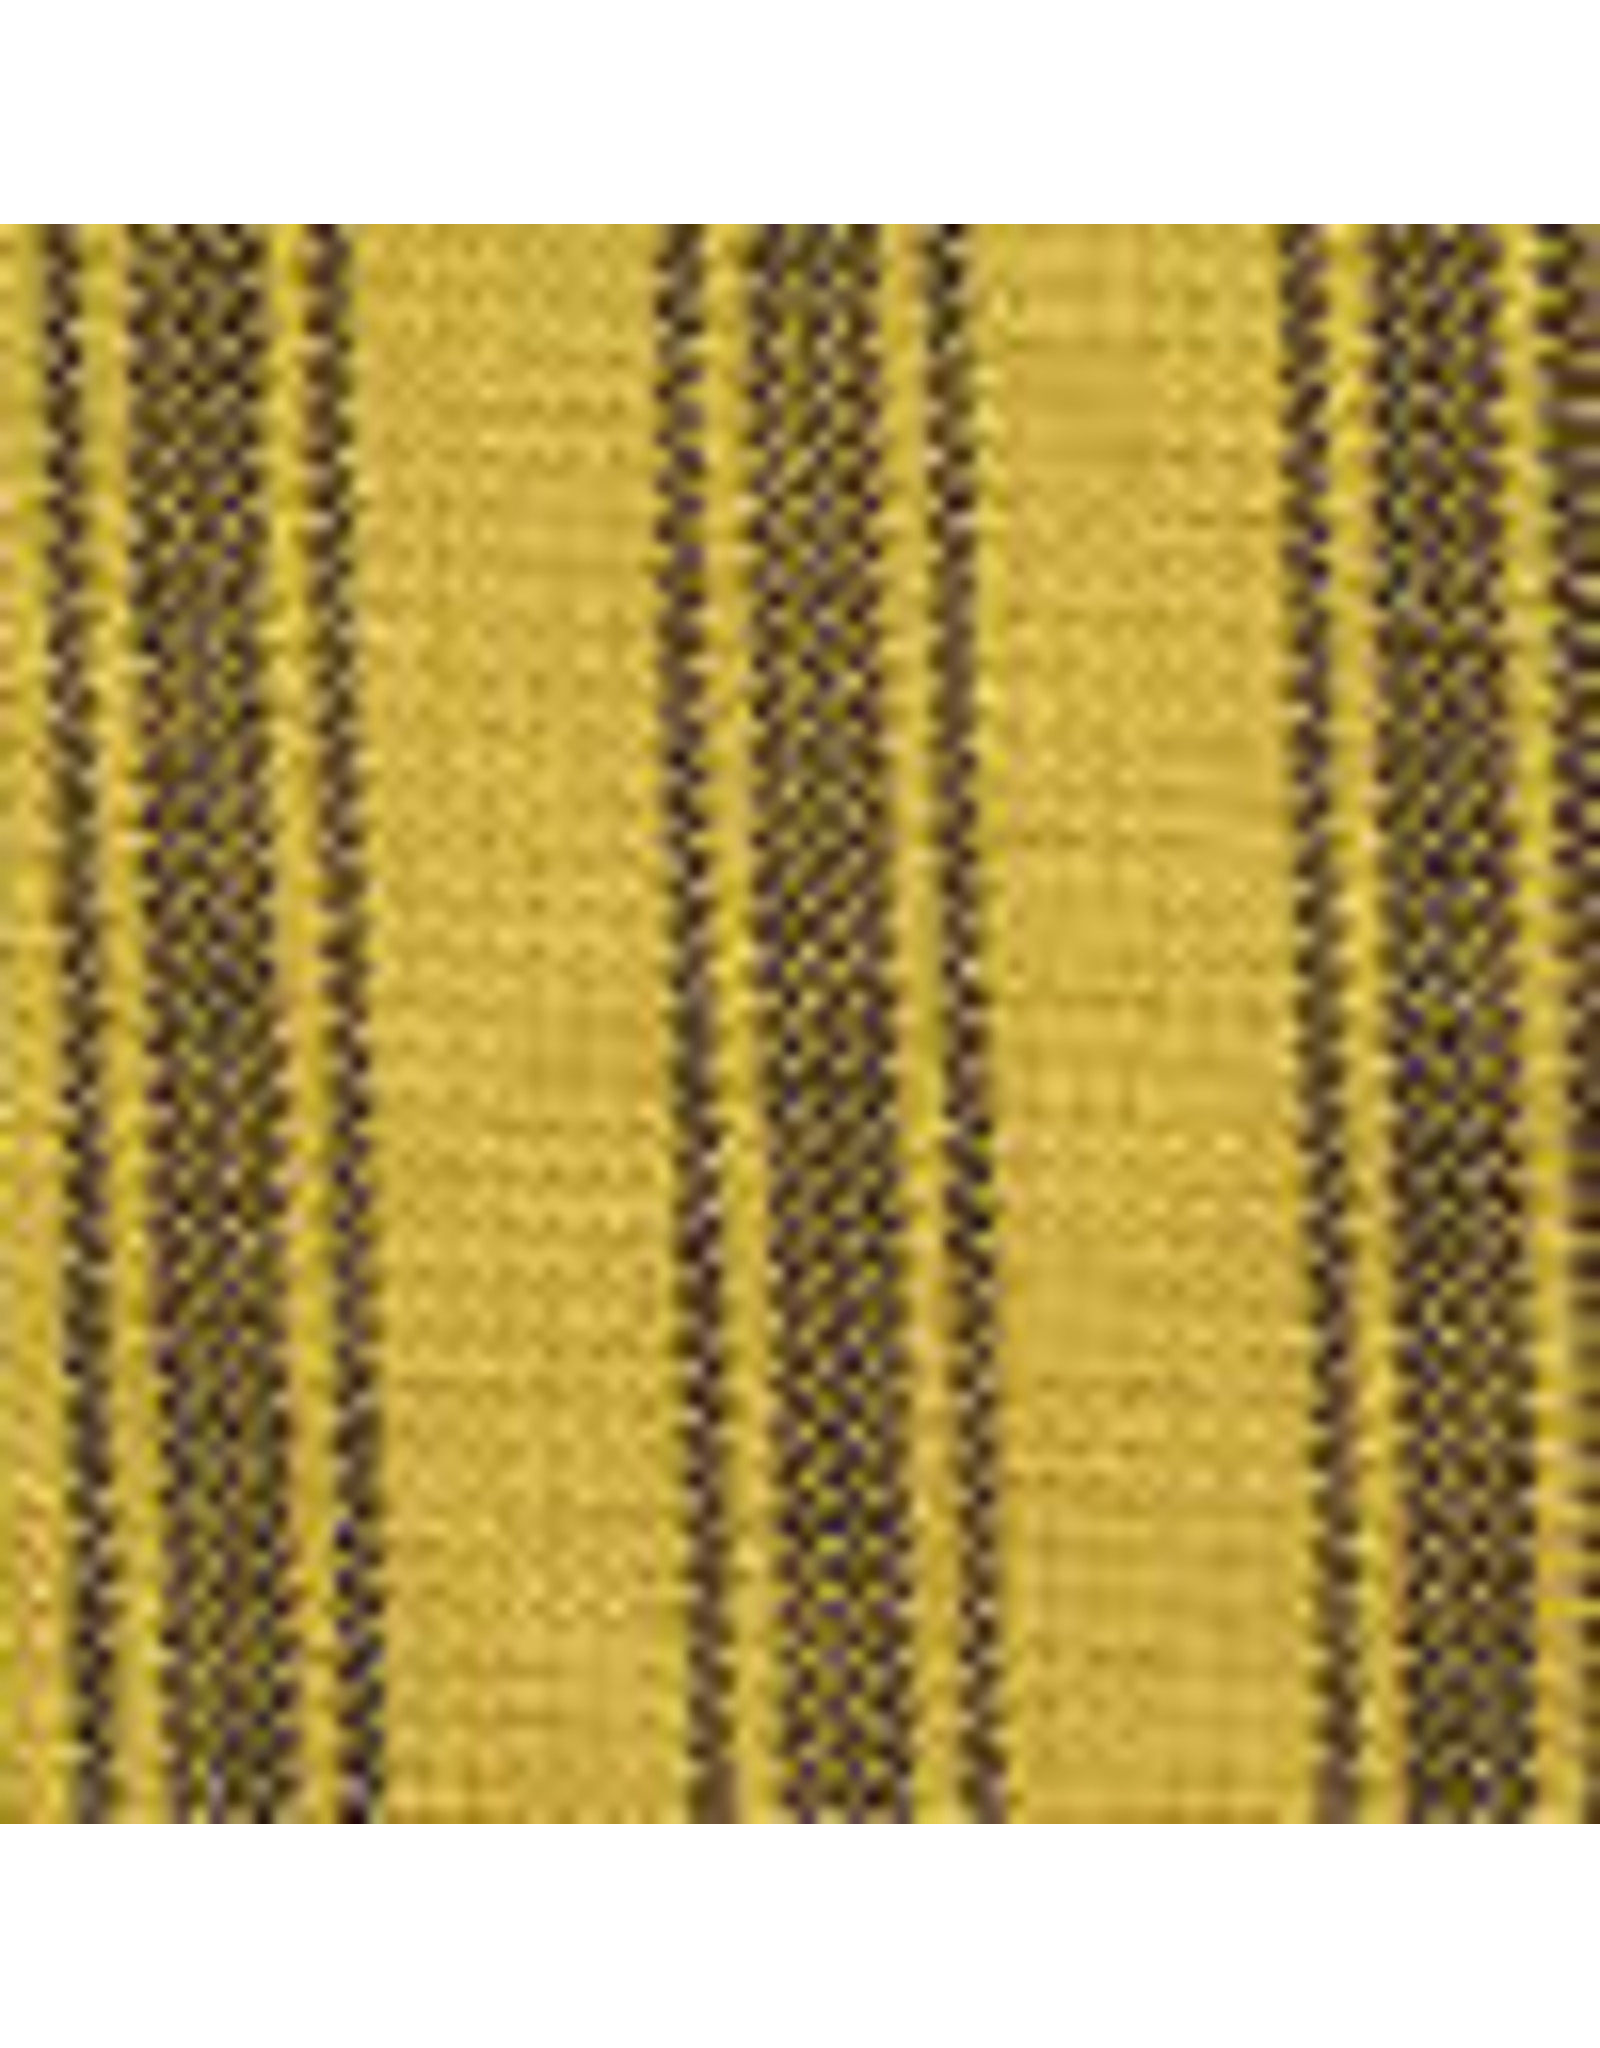 Yd. Mustard and Black Ticking Fabric #76